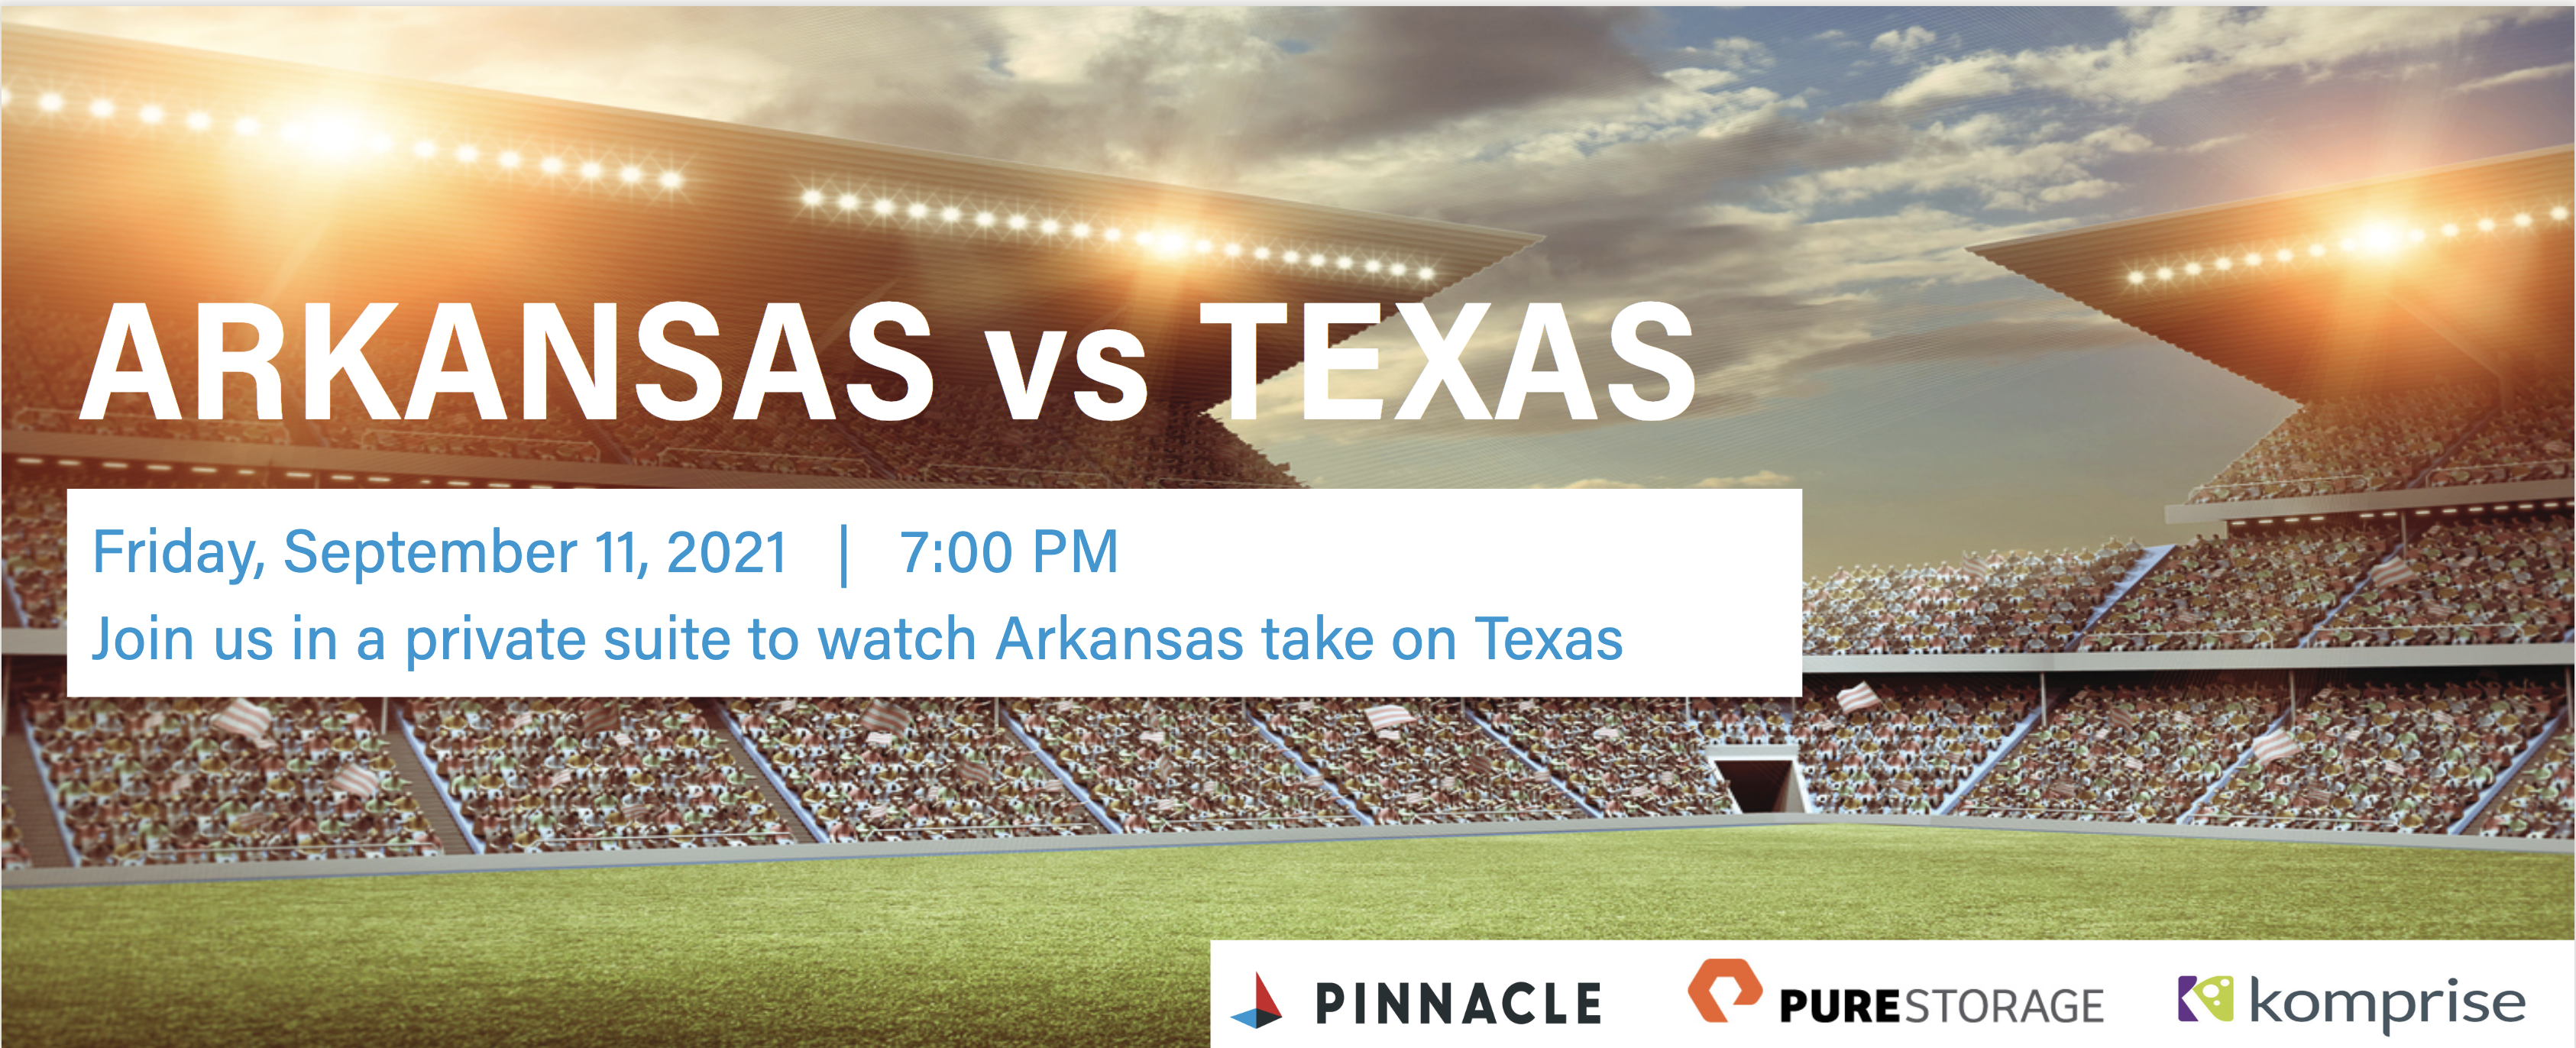 Arkansas vs Texas